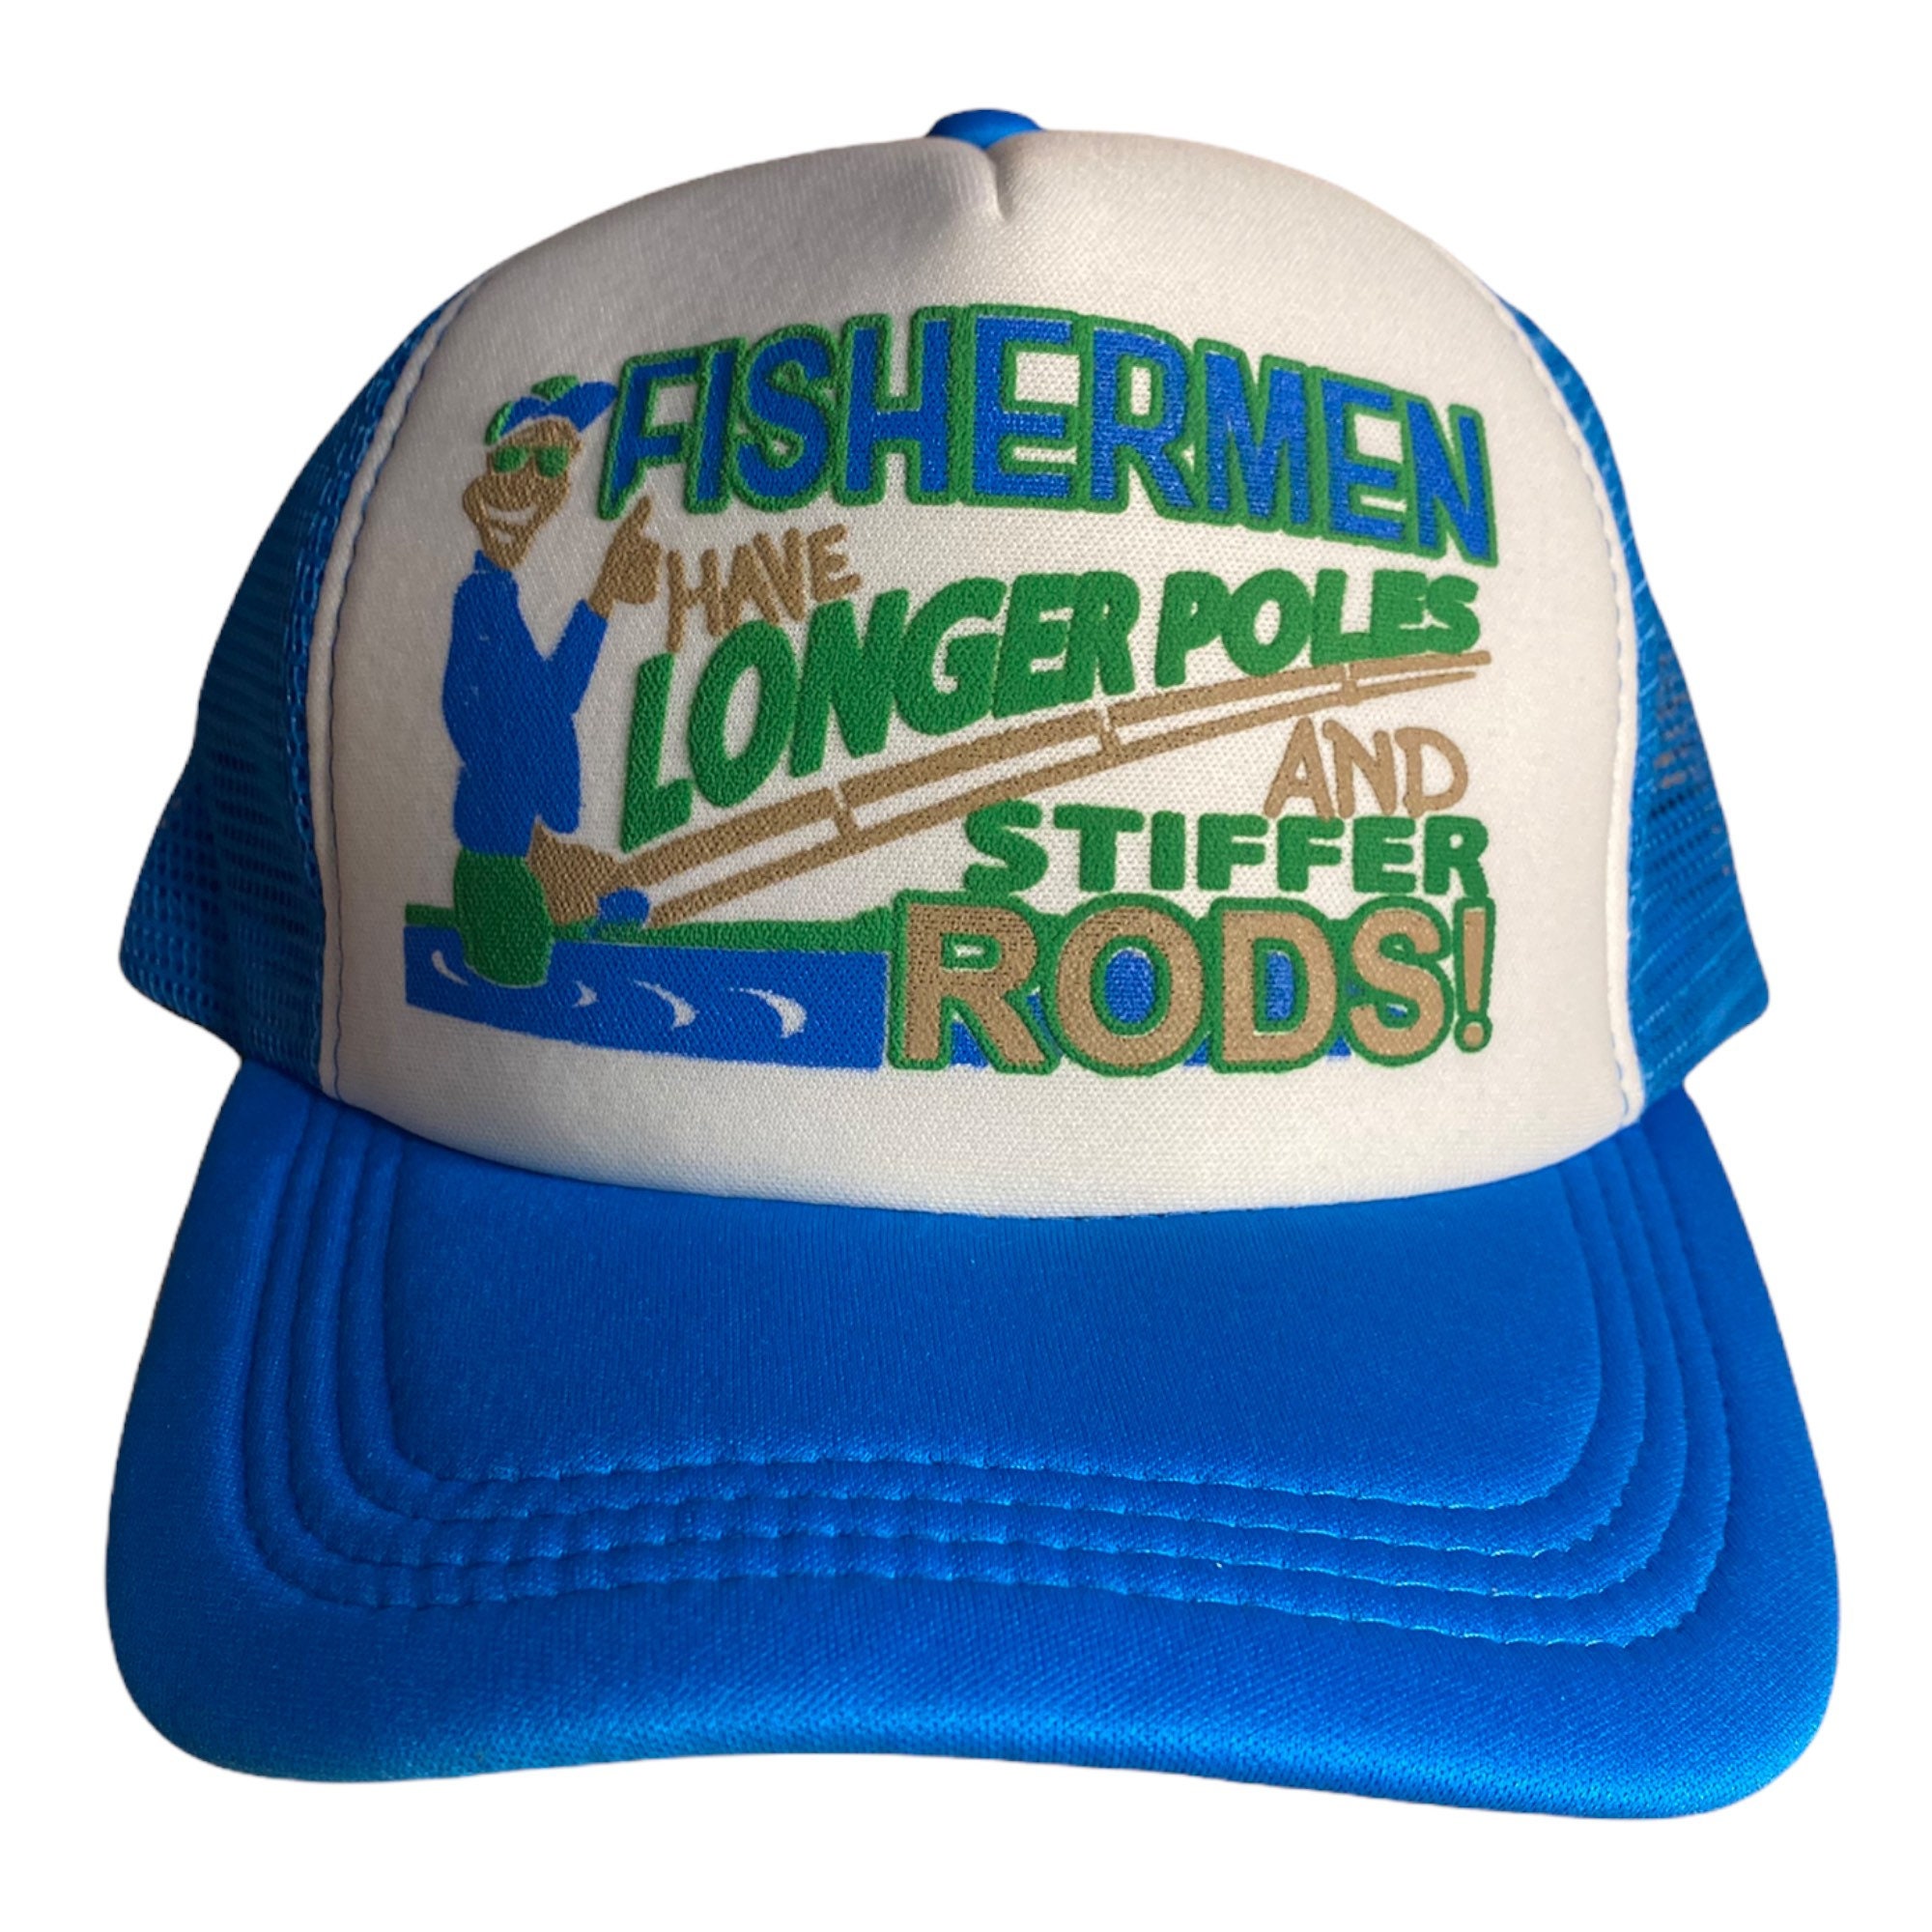 Buy Vintage Fishing Hat // Fisherman Have Longer Poles and Stiffer